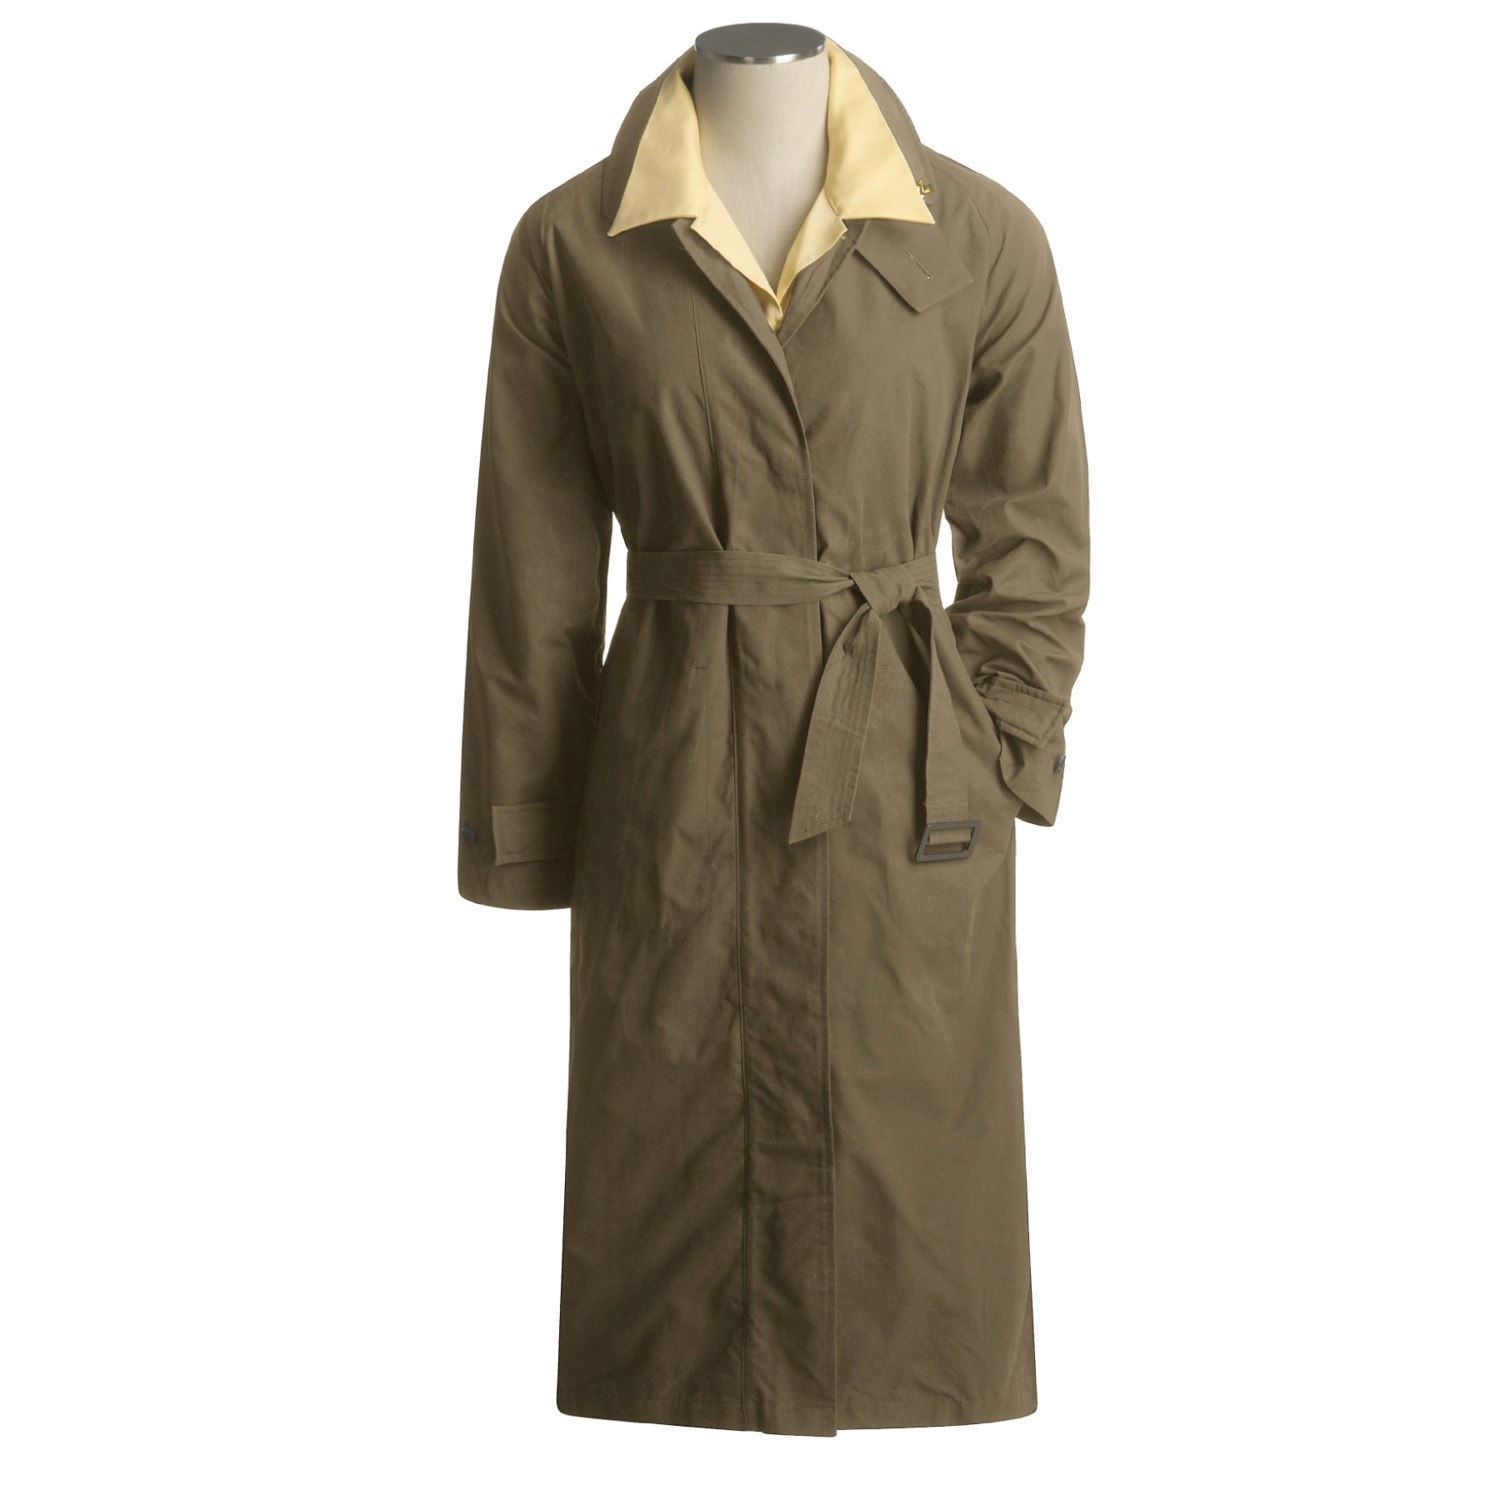 John Partridge English Drover Coat (For Women) 92486 - Save 93%